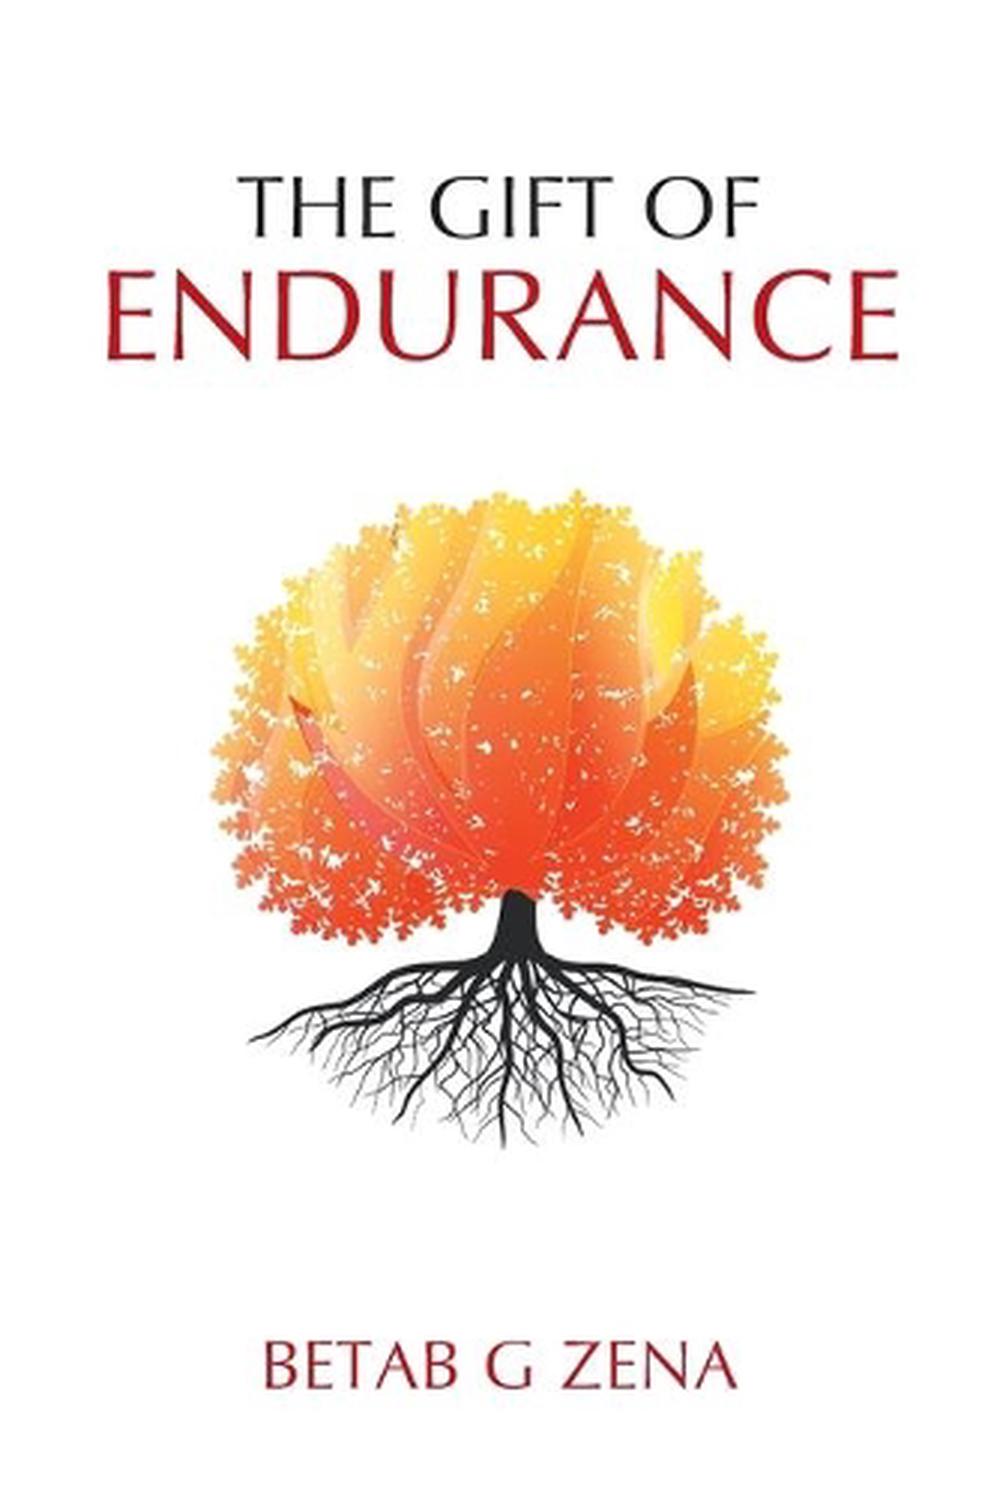 endurance book georgia